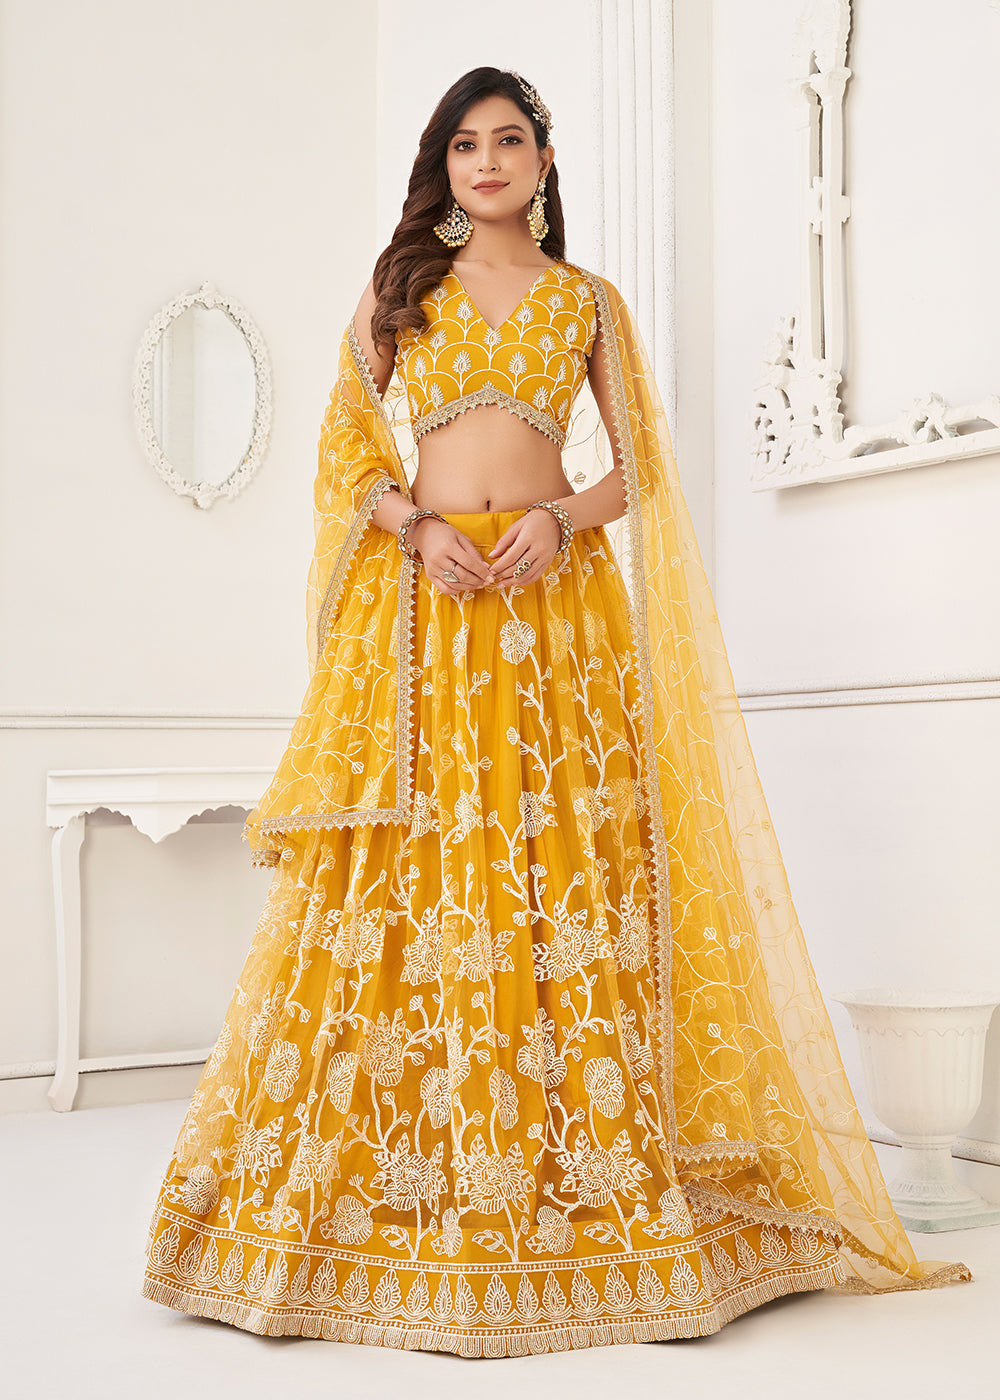 Buy Now Embroidered Net Yellow Sangeet & Haldi Wear Lehenga Choli Online in USA, UK, Canada & Worldwide at Empress Clothing. 